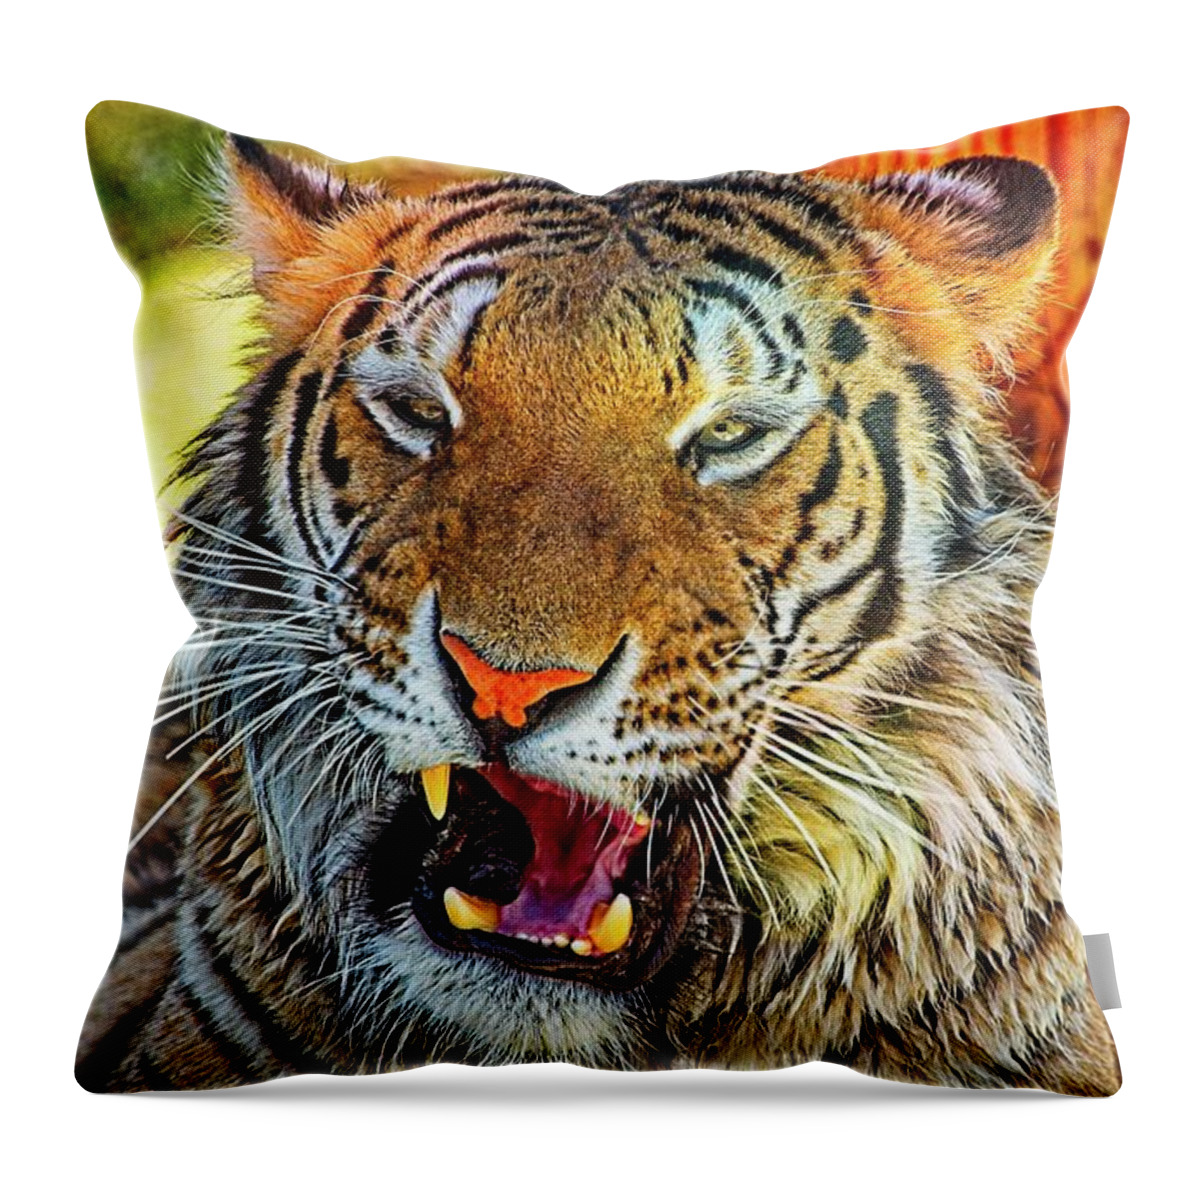 Animal Throw Pillow featuring the photograph Big Cat Yawning by David Desautel